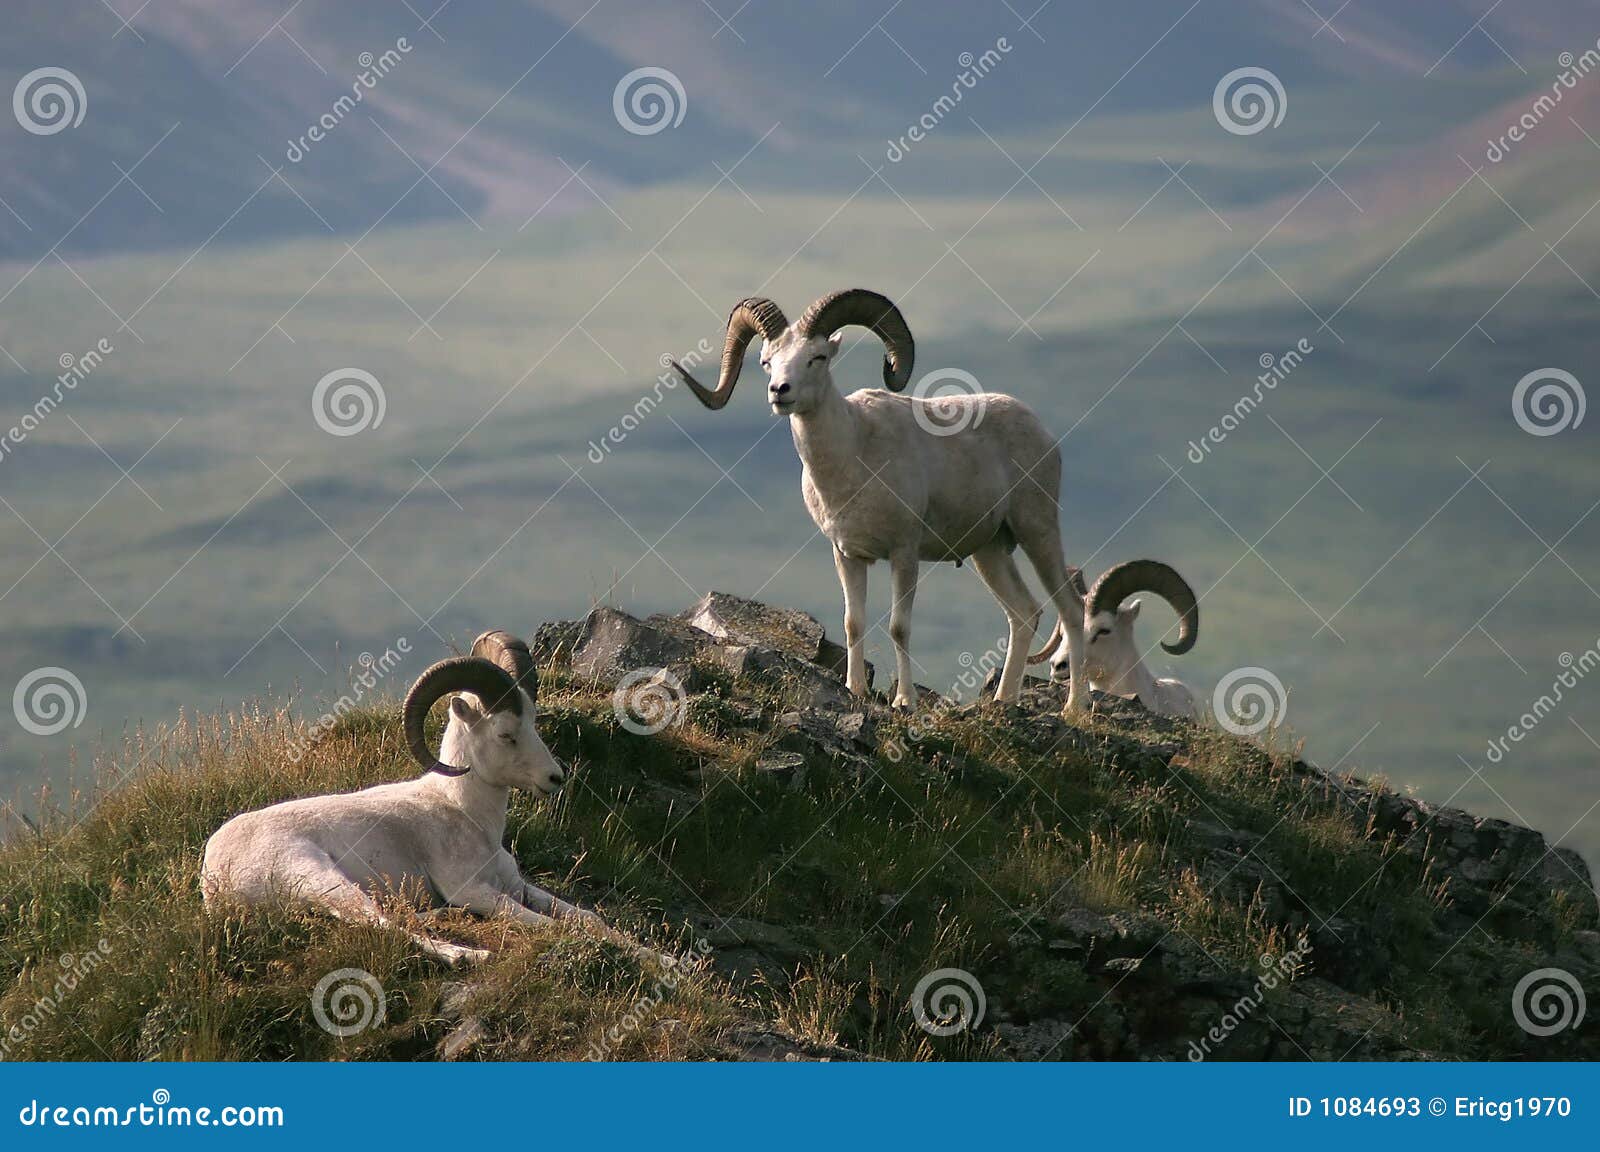 dall sheep in alaska